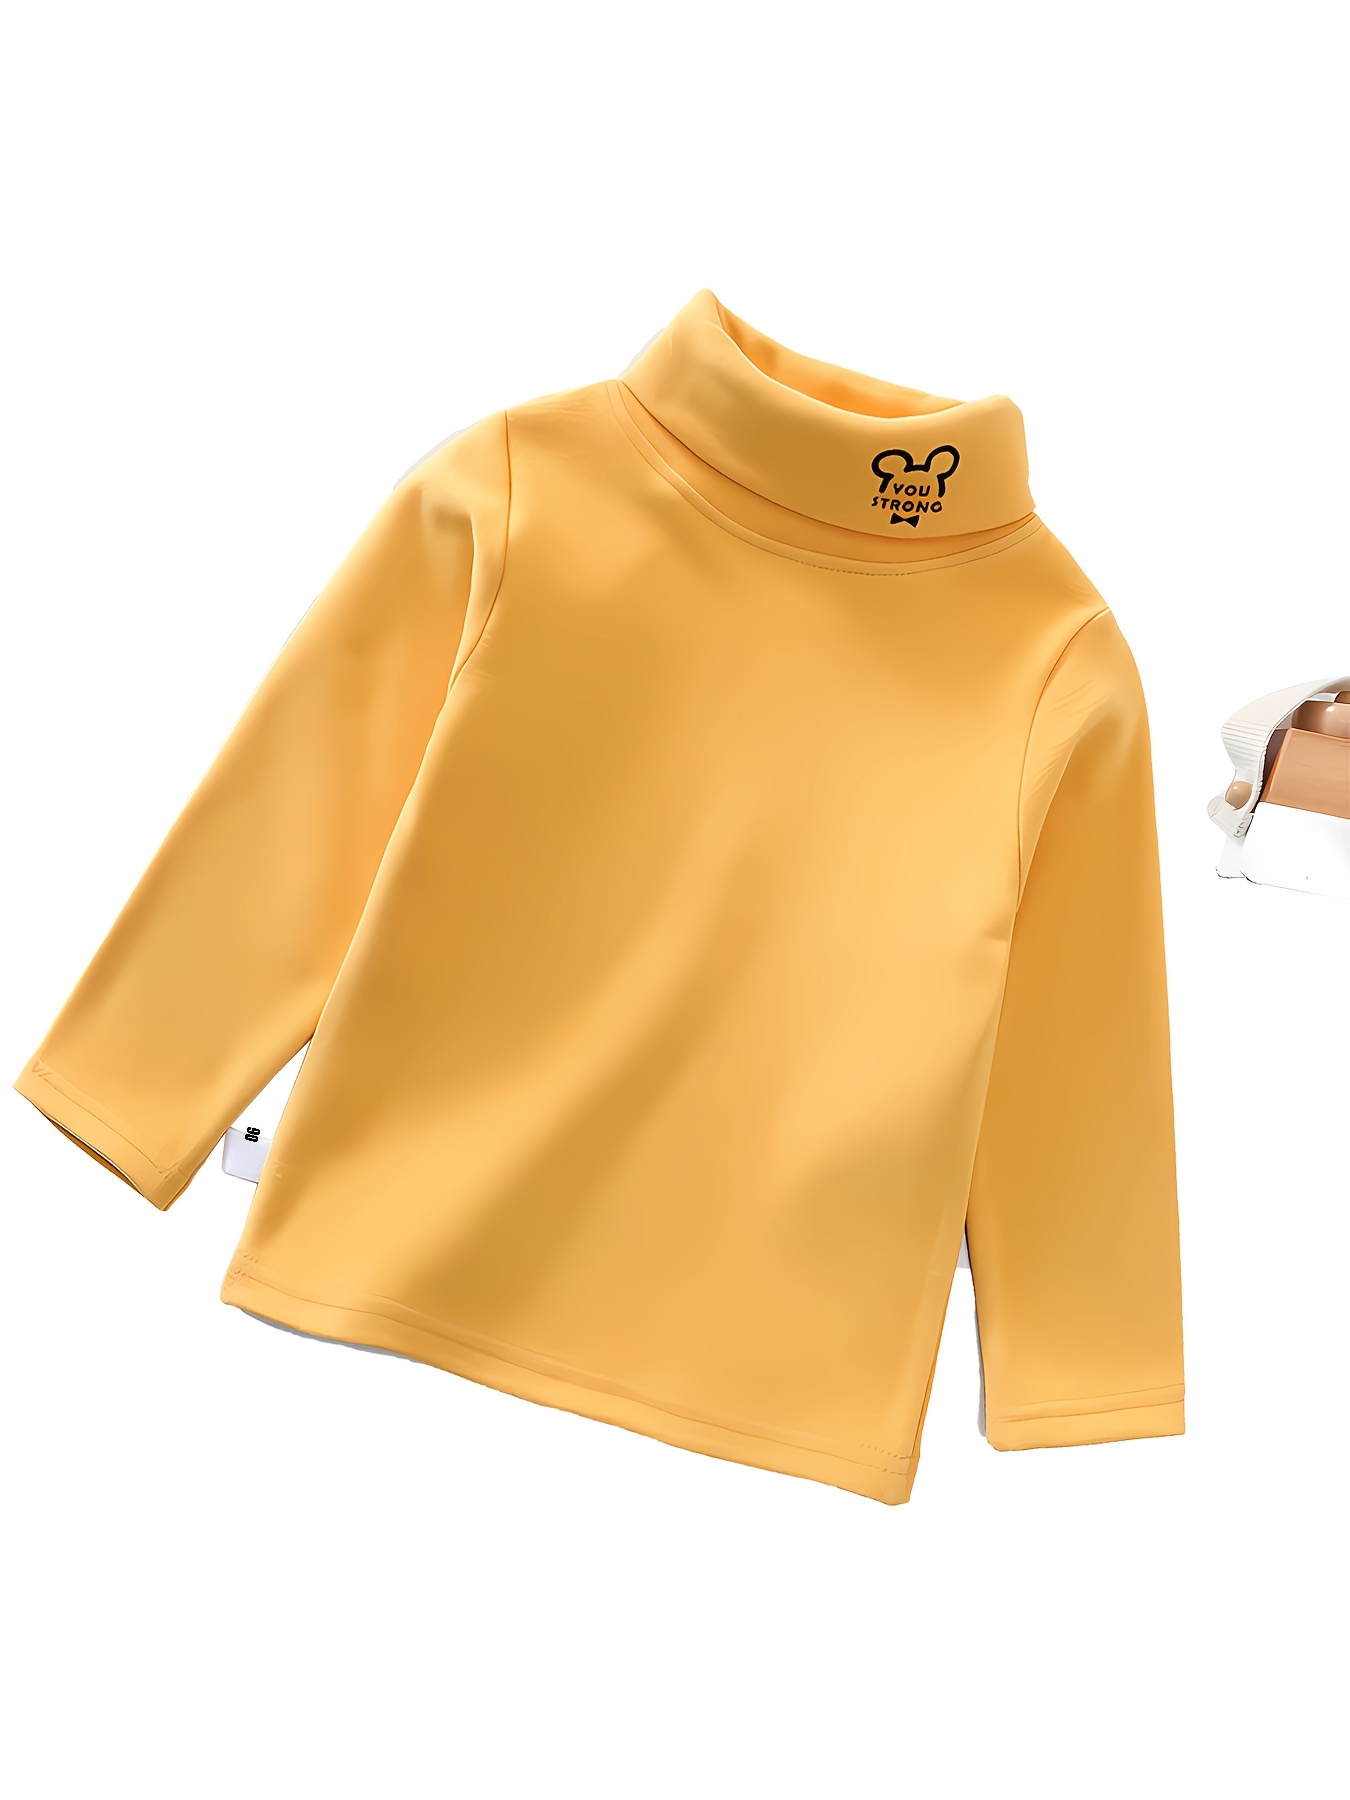 Camiseta de cuello alto de punto de canalé y mangas con volantes, niña  amarillo oscuro estampado - Vertbaudet